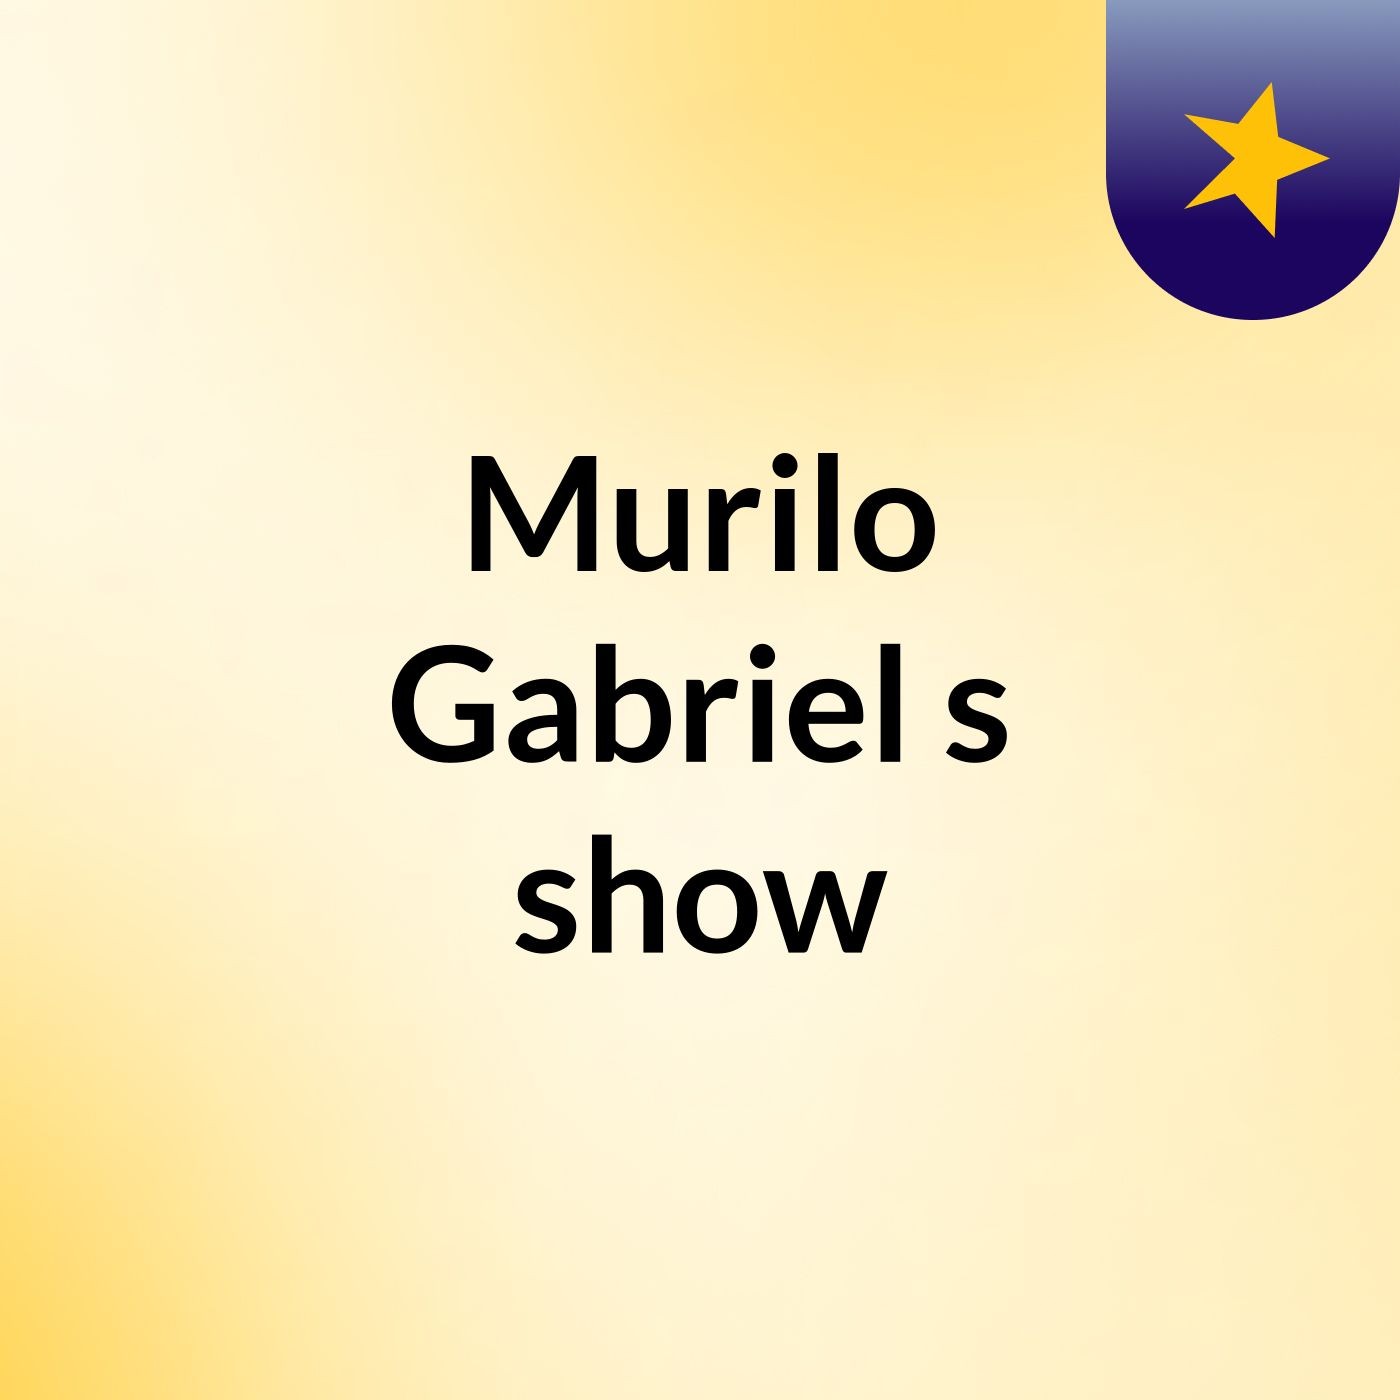 Murilo Gabriel's show